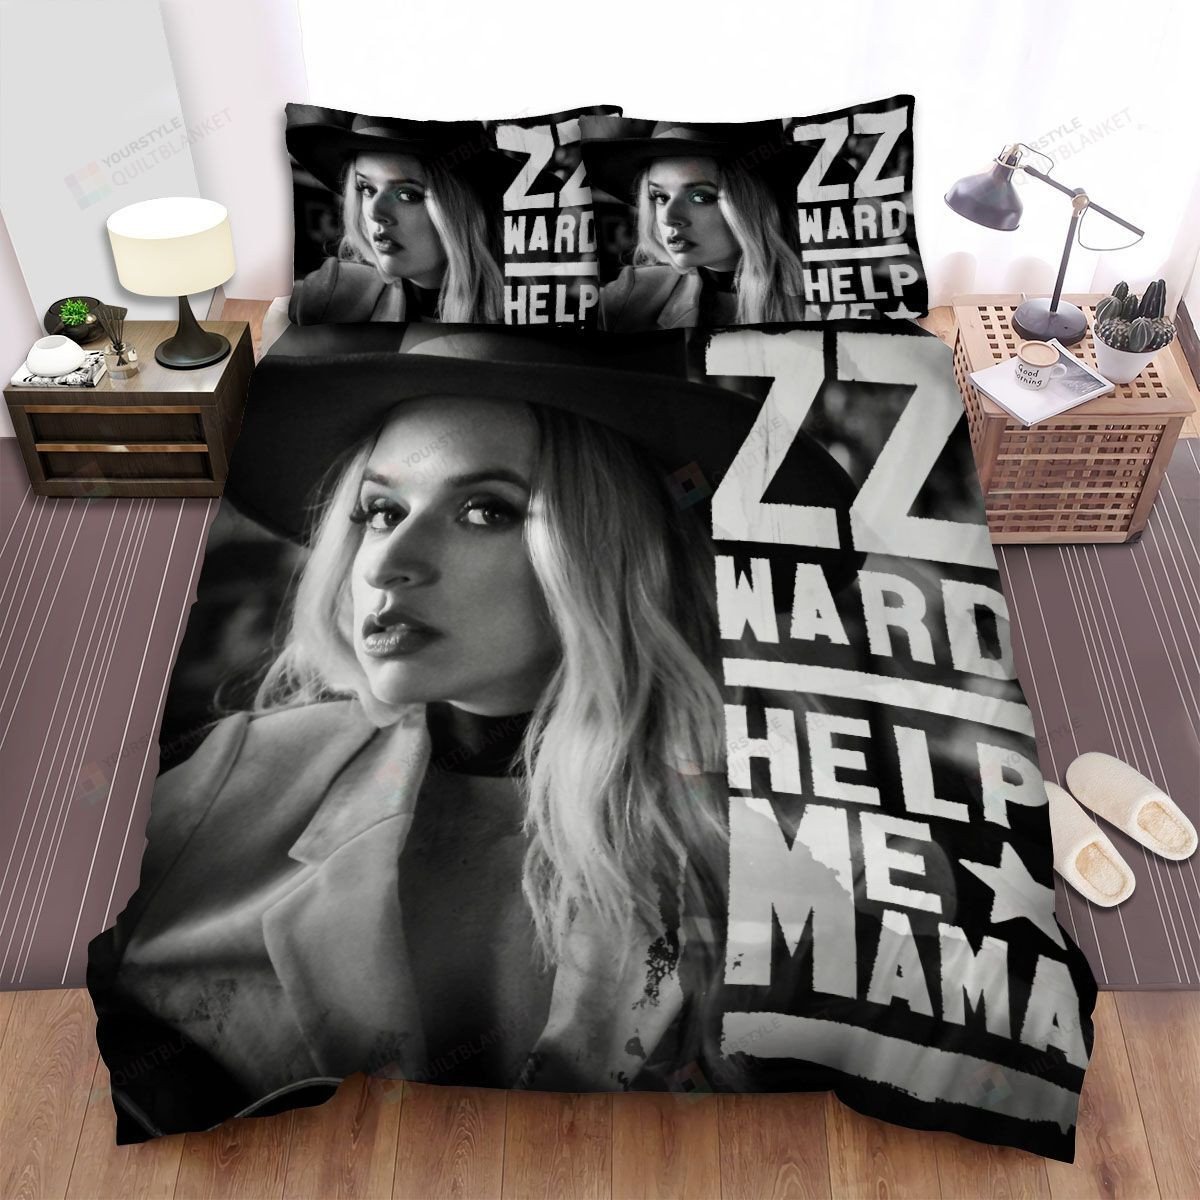 Zz Ward Music Help Me Mama Poster Comforter Bedding Sets